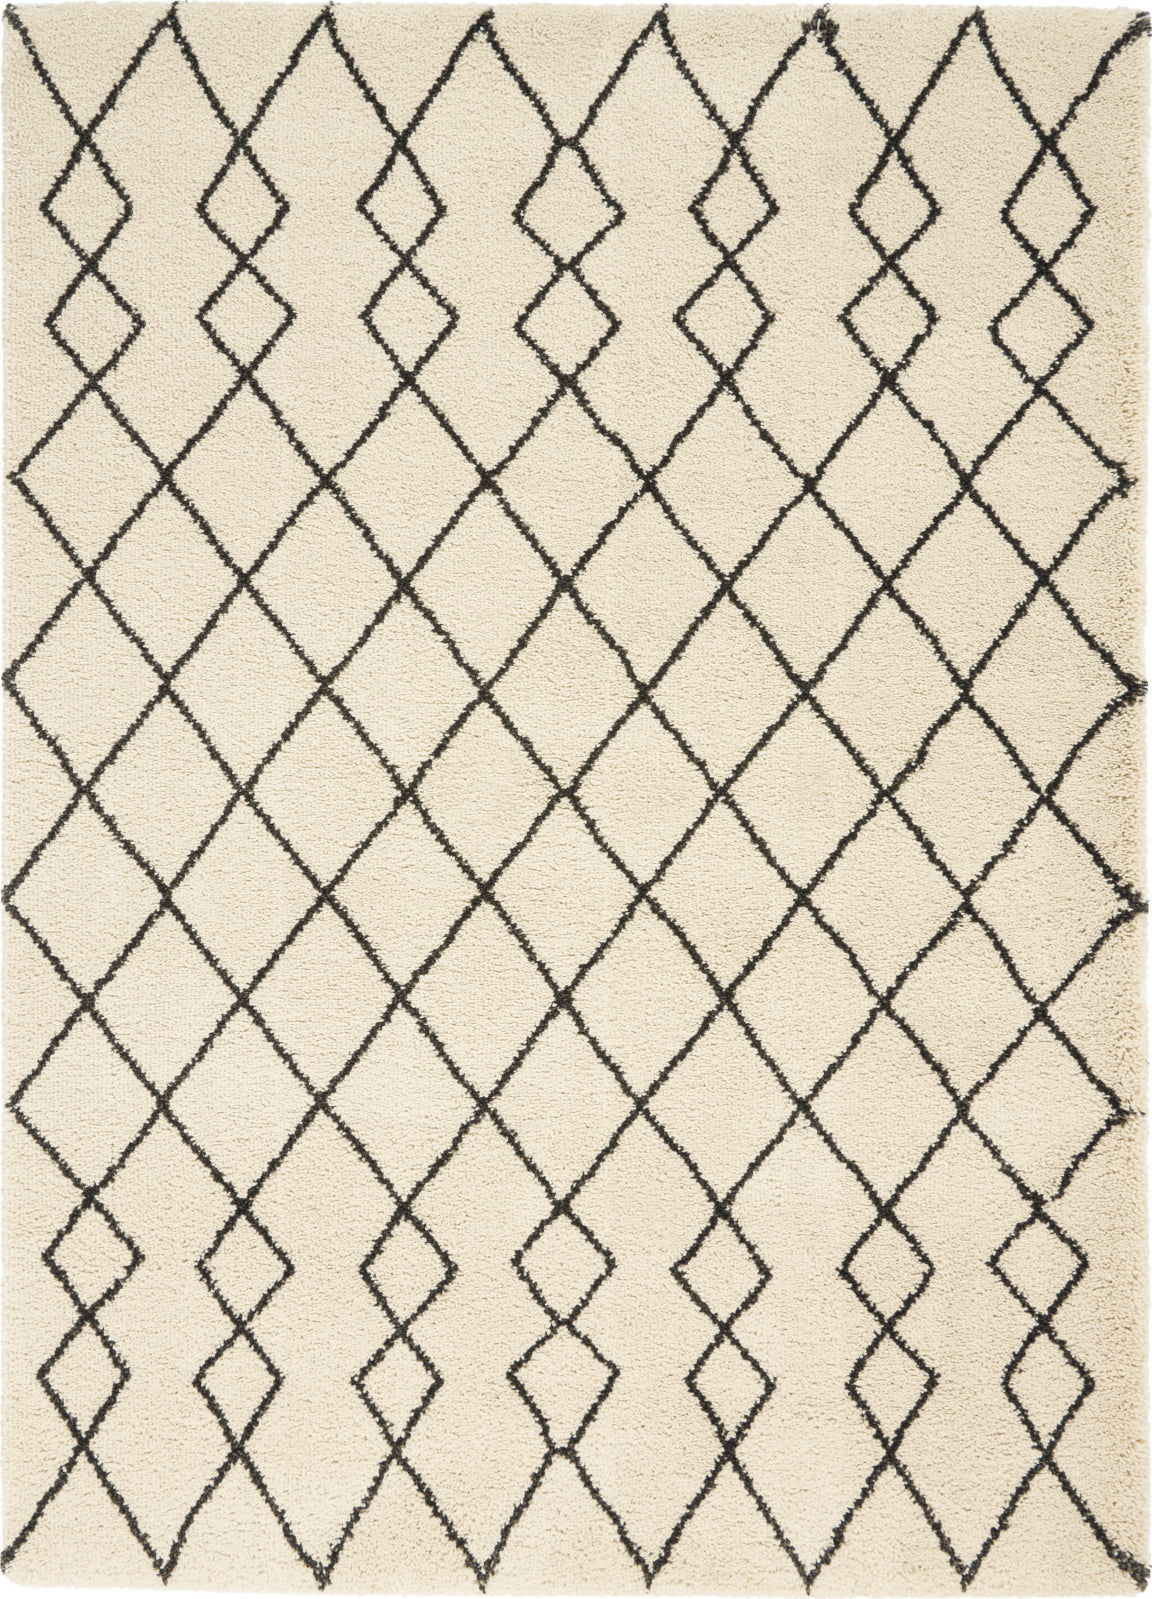 Geometric Shag GOS01 Ivory/Charcoal Area Rug by Nourison